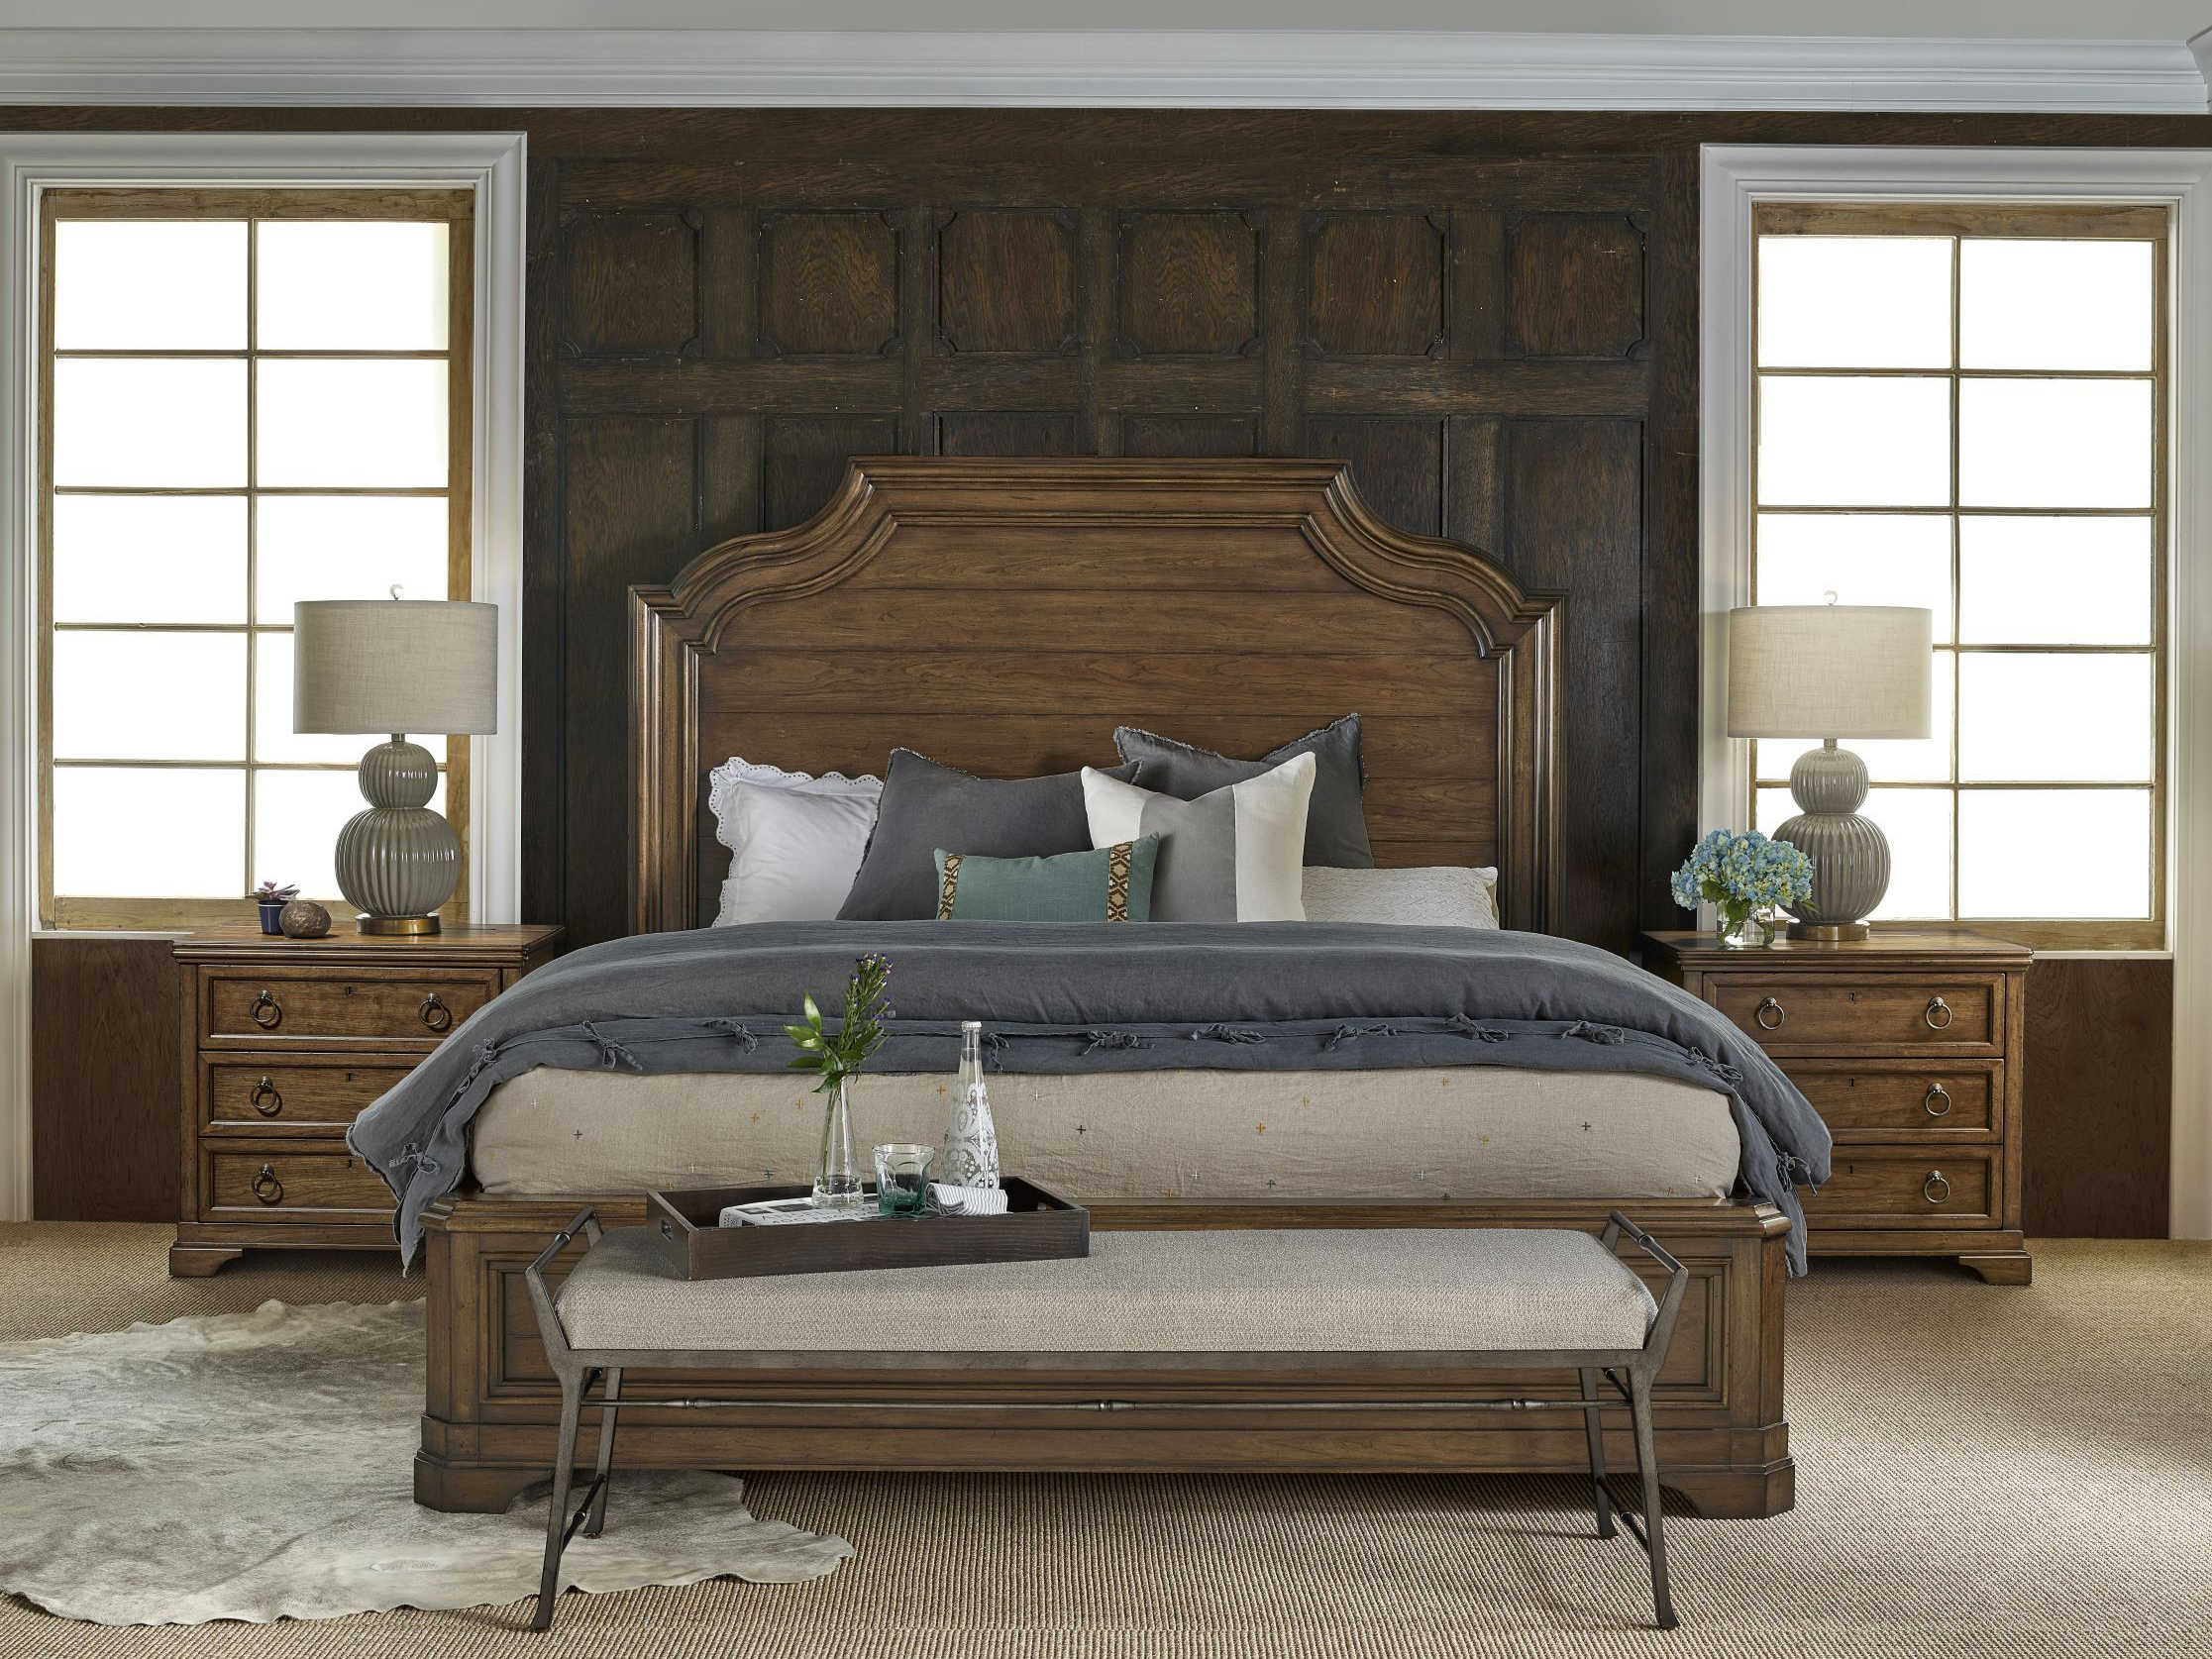 universal bedroom furniture woven